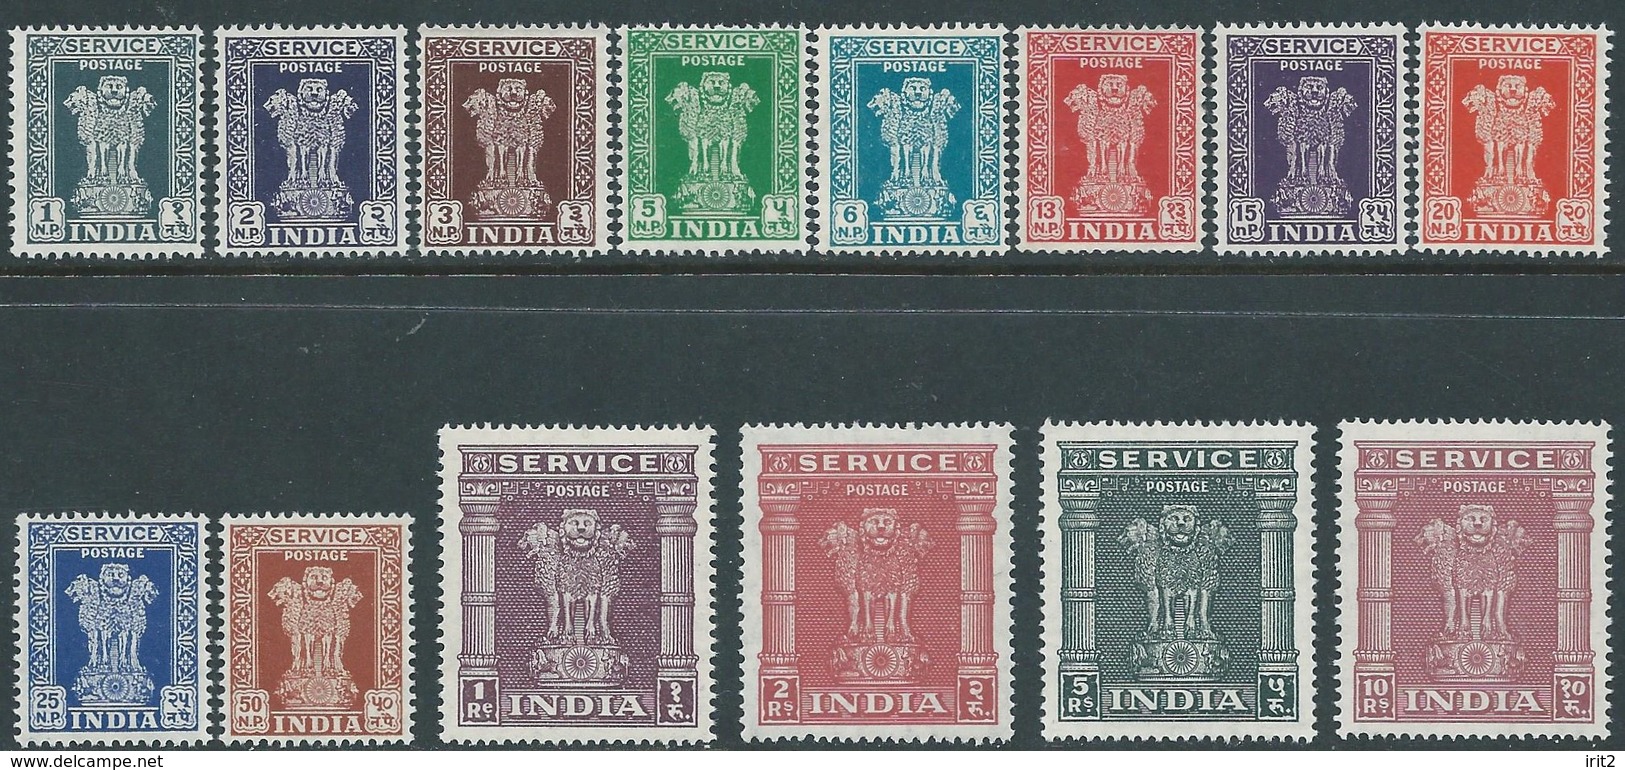 Stamps INDIA Repubblica 1950 - BEAUTIFUL COMPLETE SERIES - Nuevos